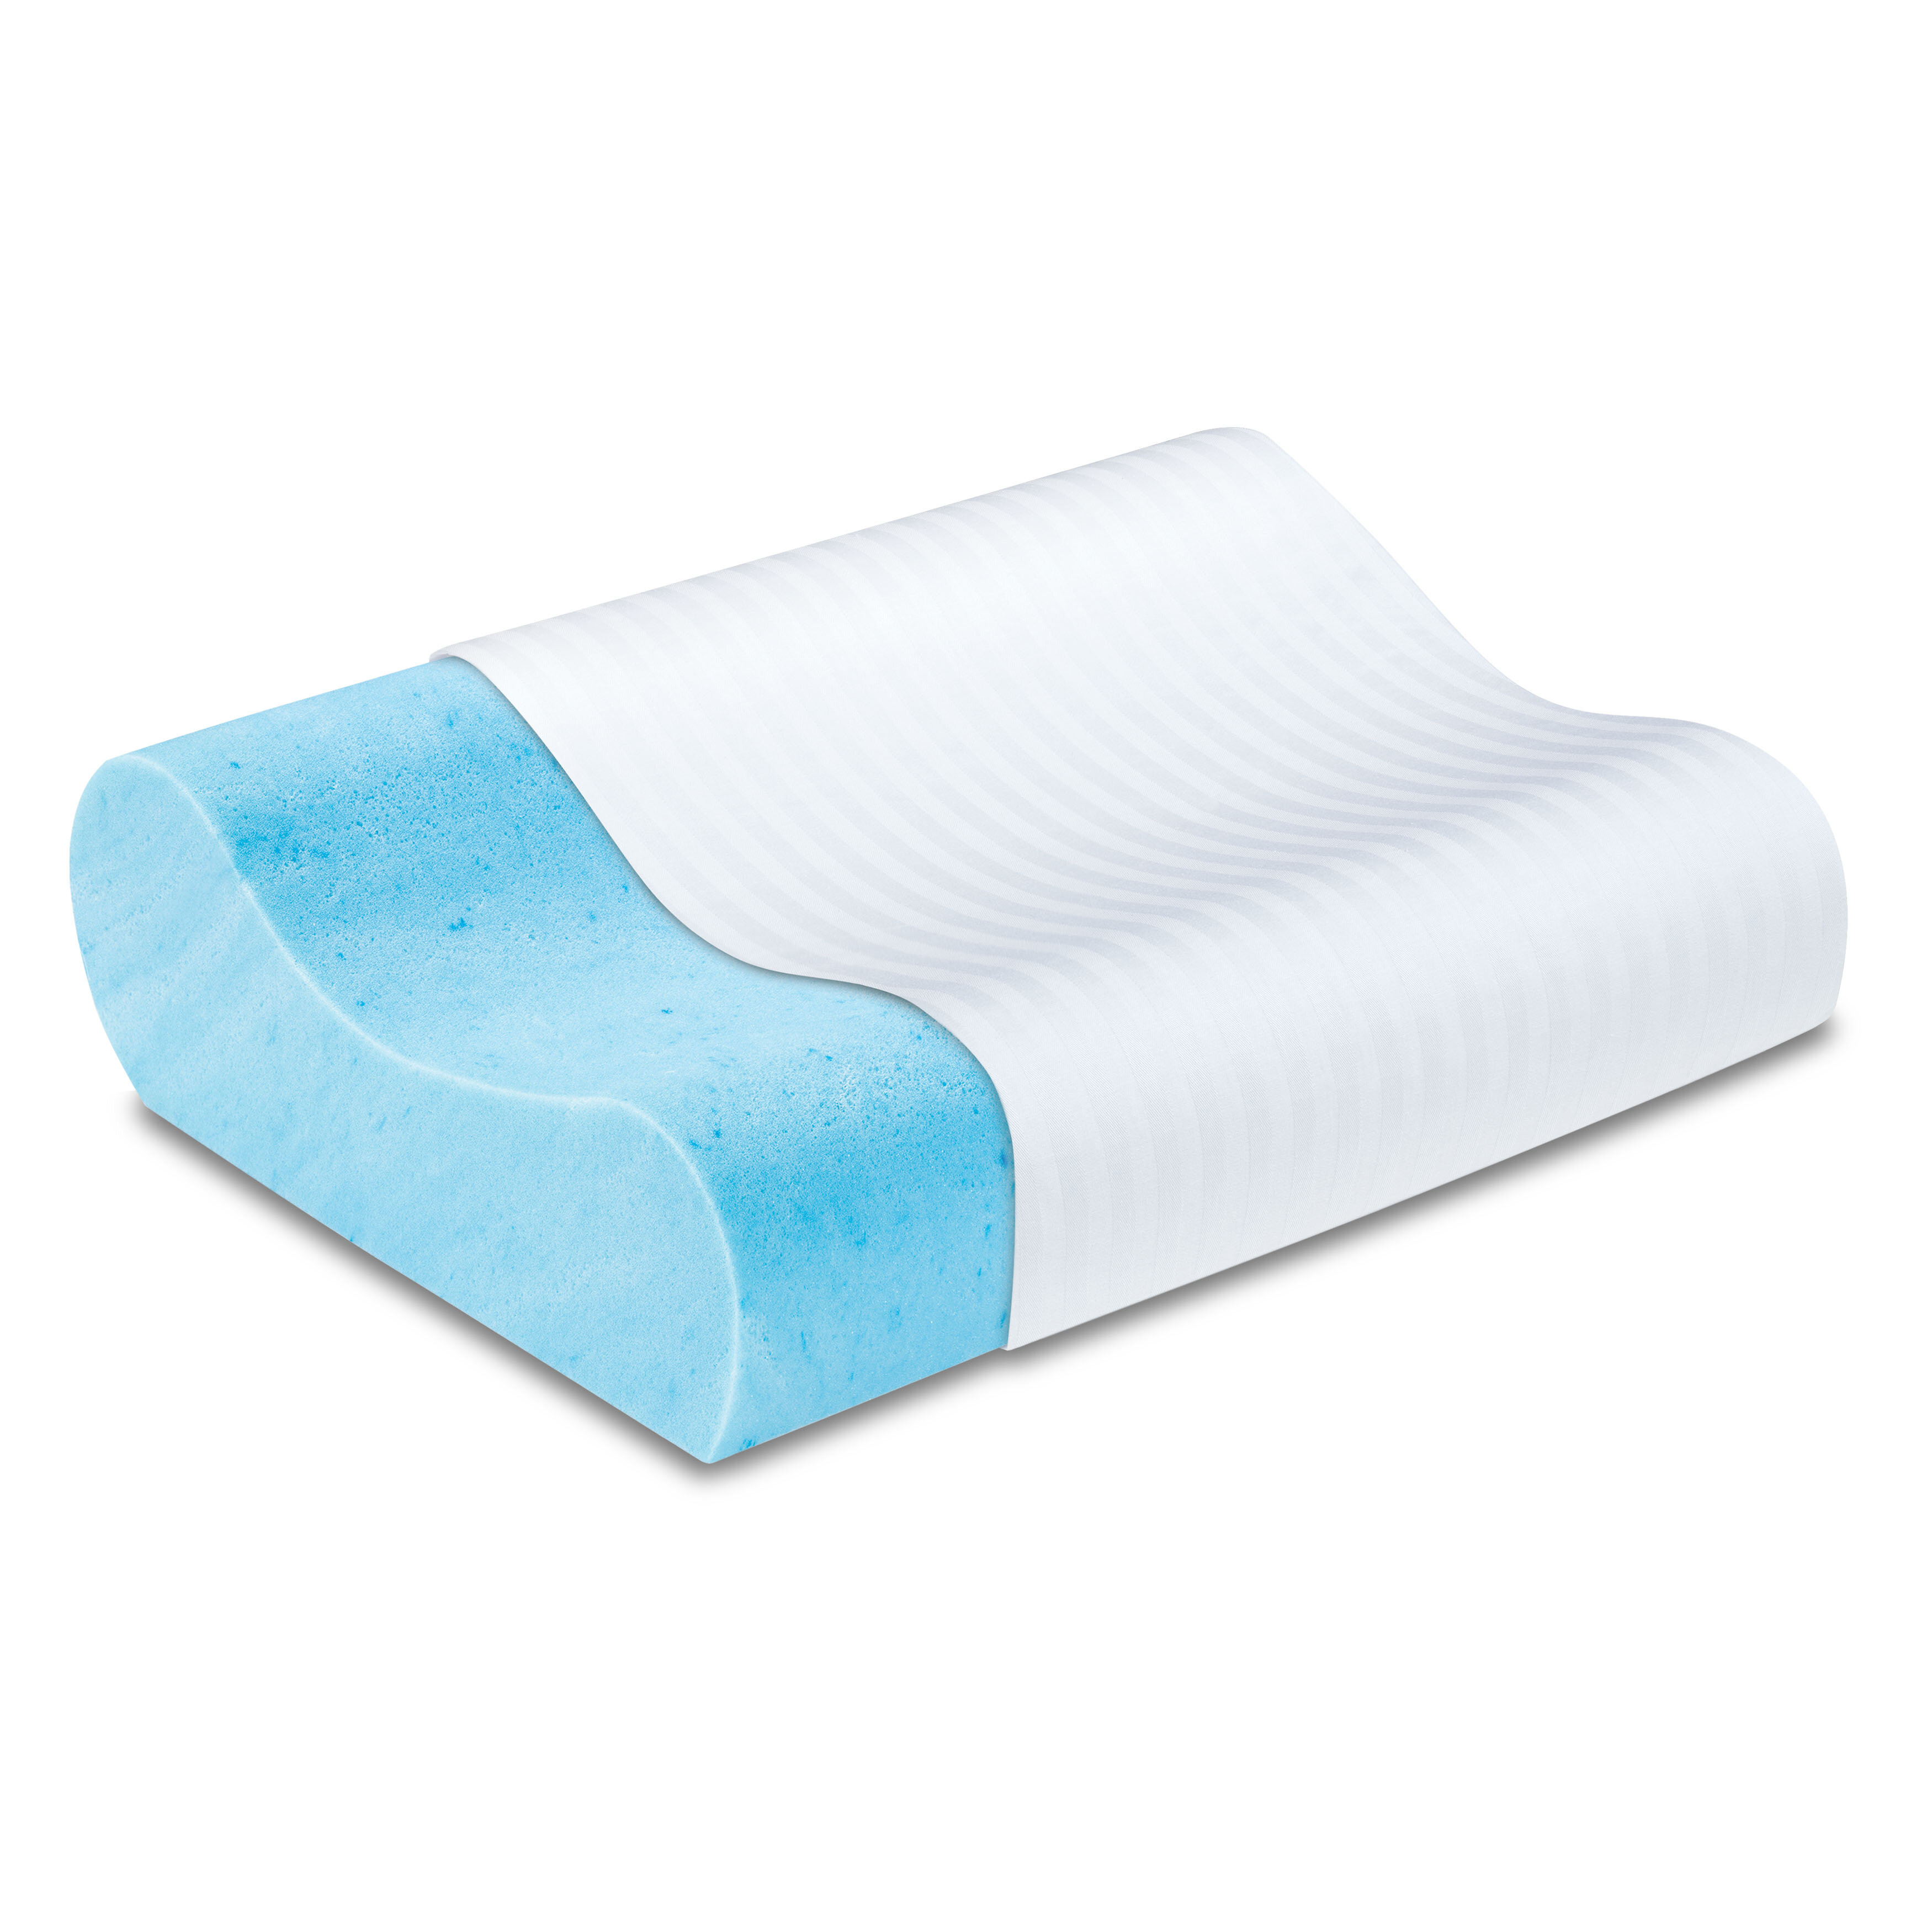 Luxury Solutions Gel Memory Foam Medium Support Pillow Reviews Wayfair